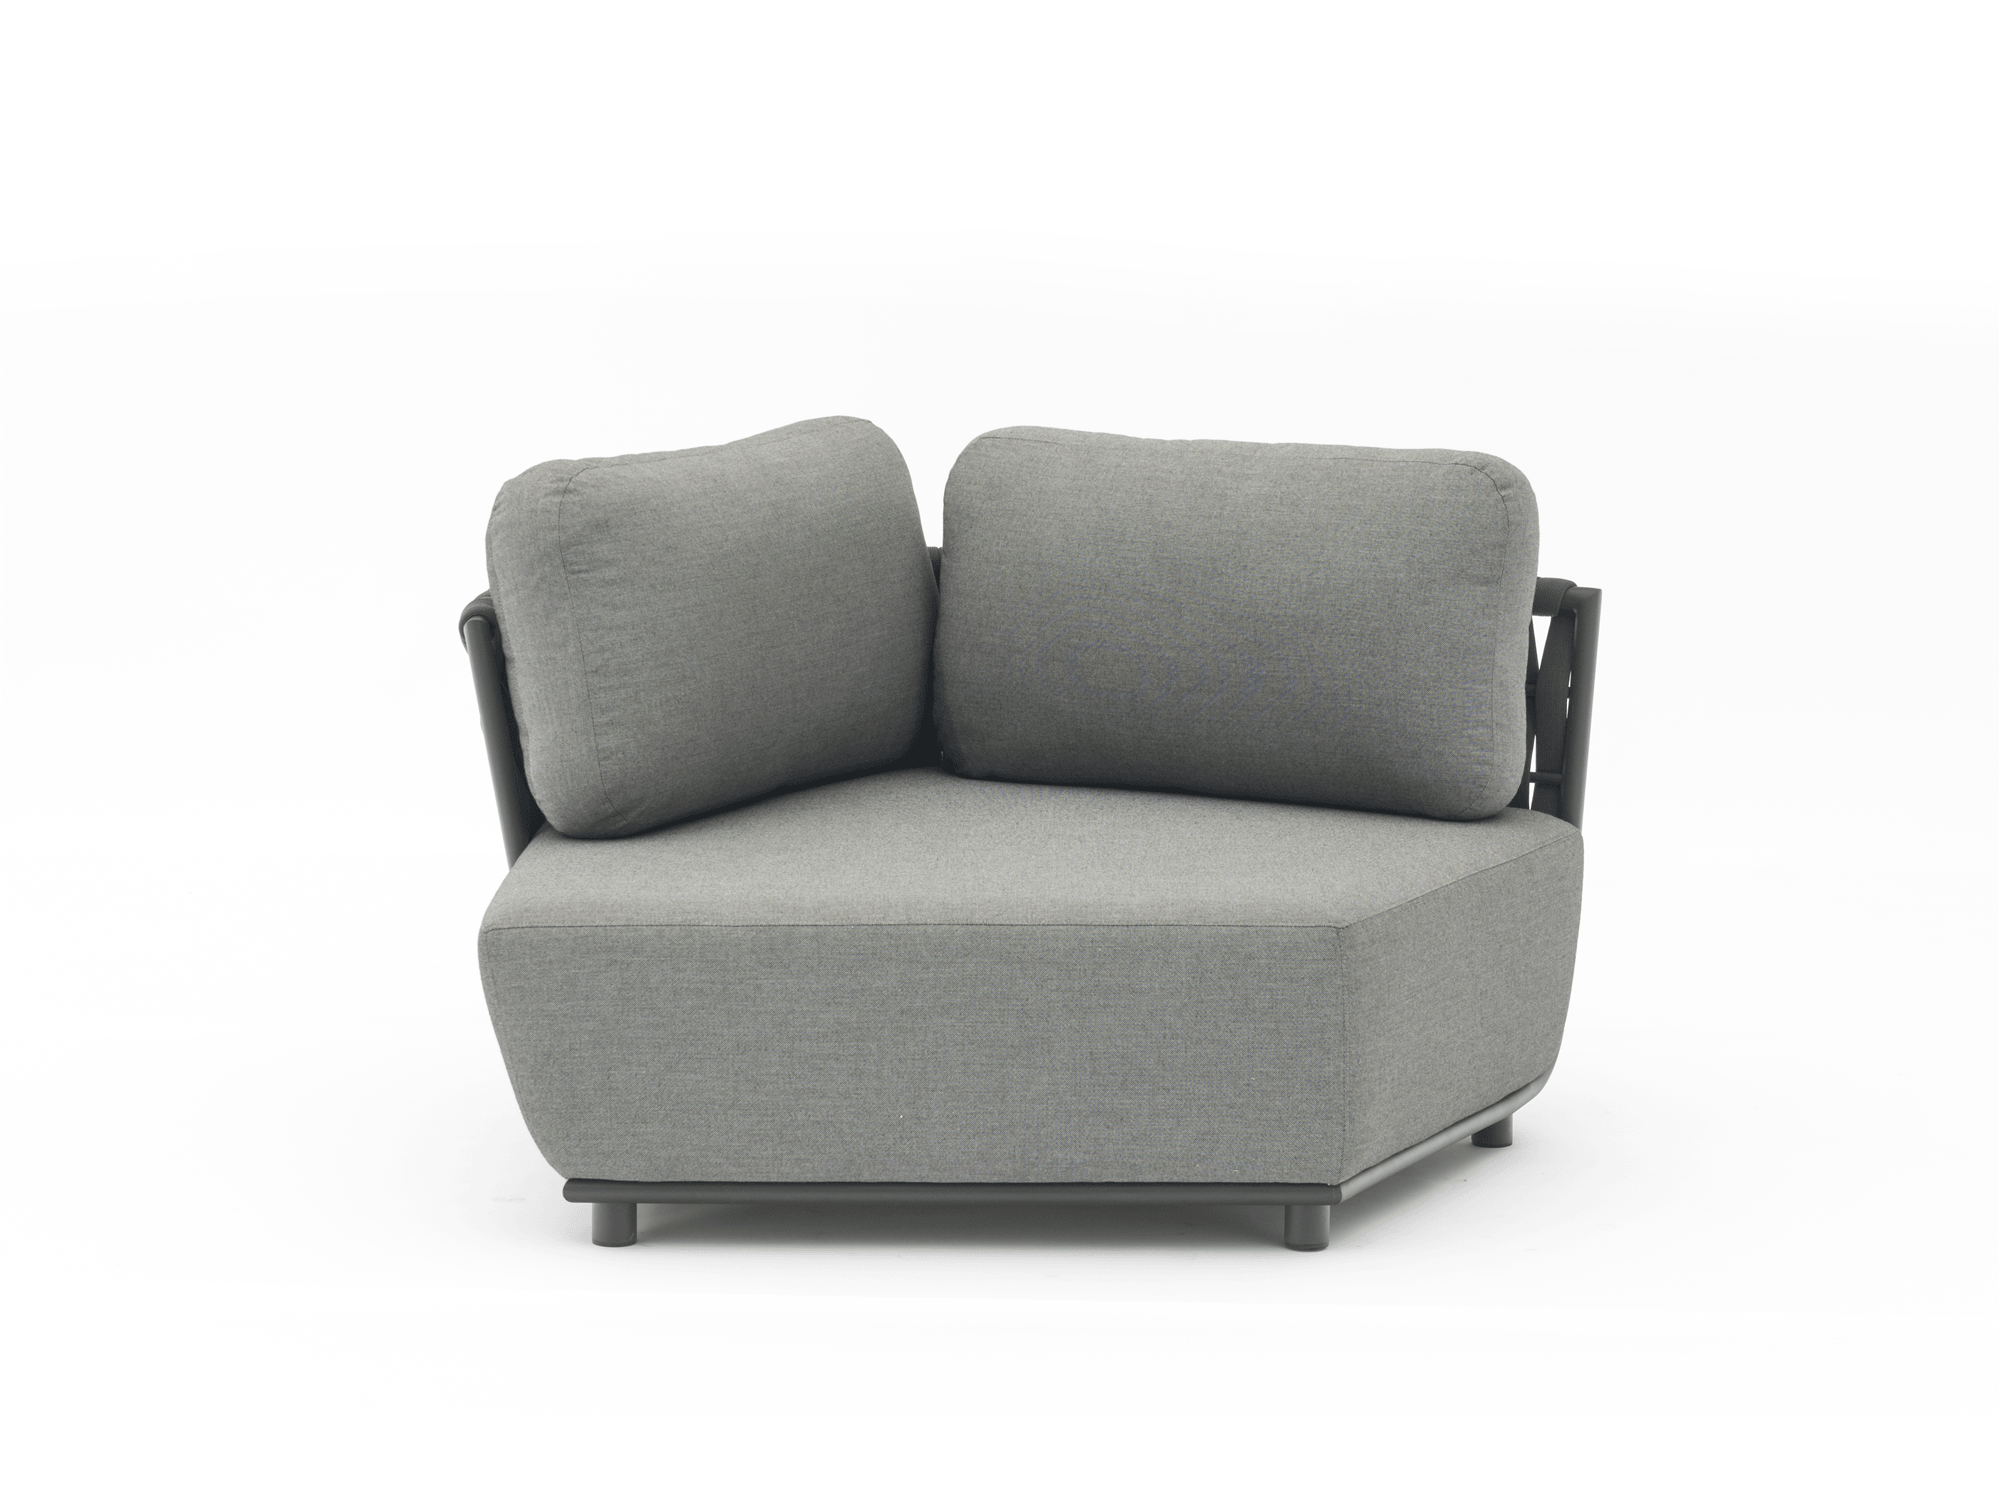 Ayla Outdoor Chair in Dark Grey - Euro Living Furniture